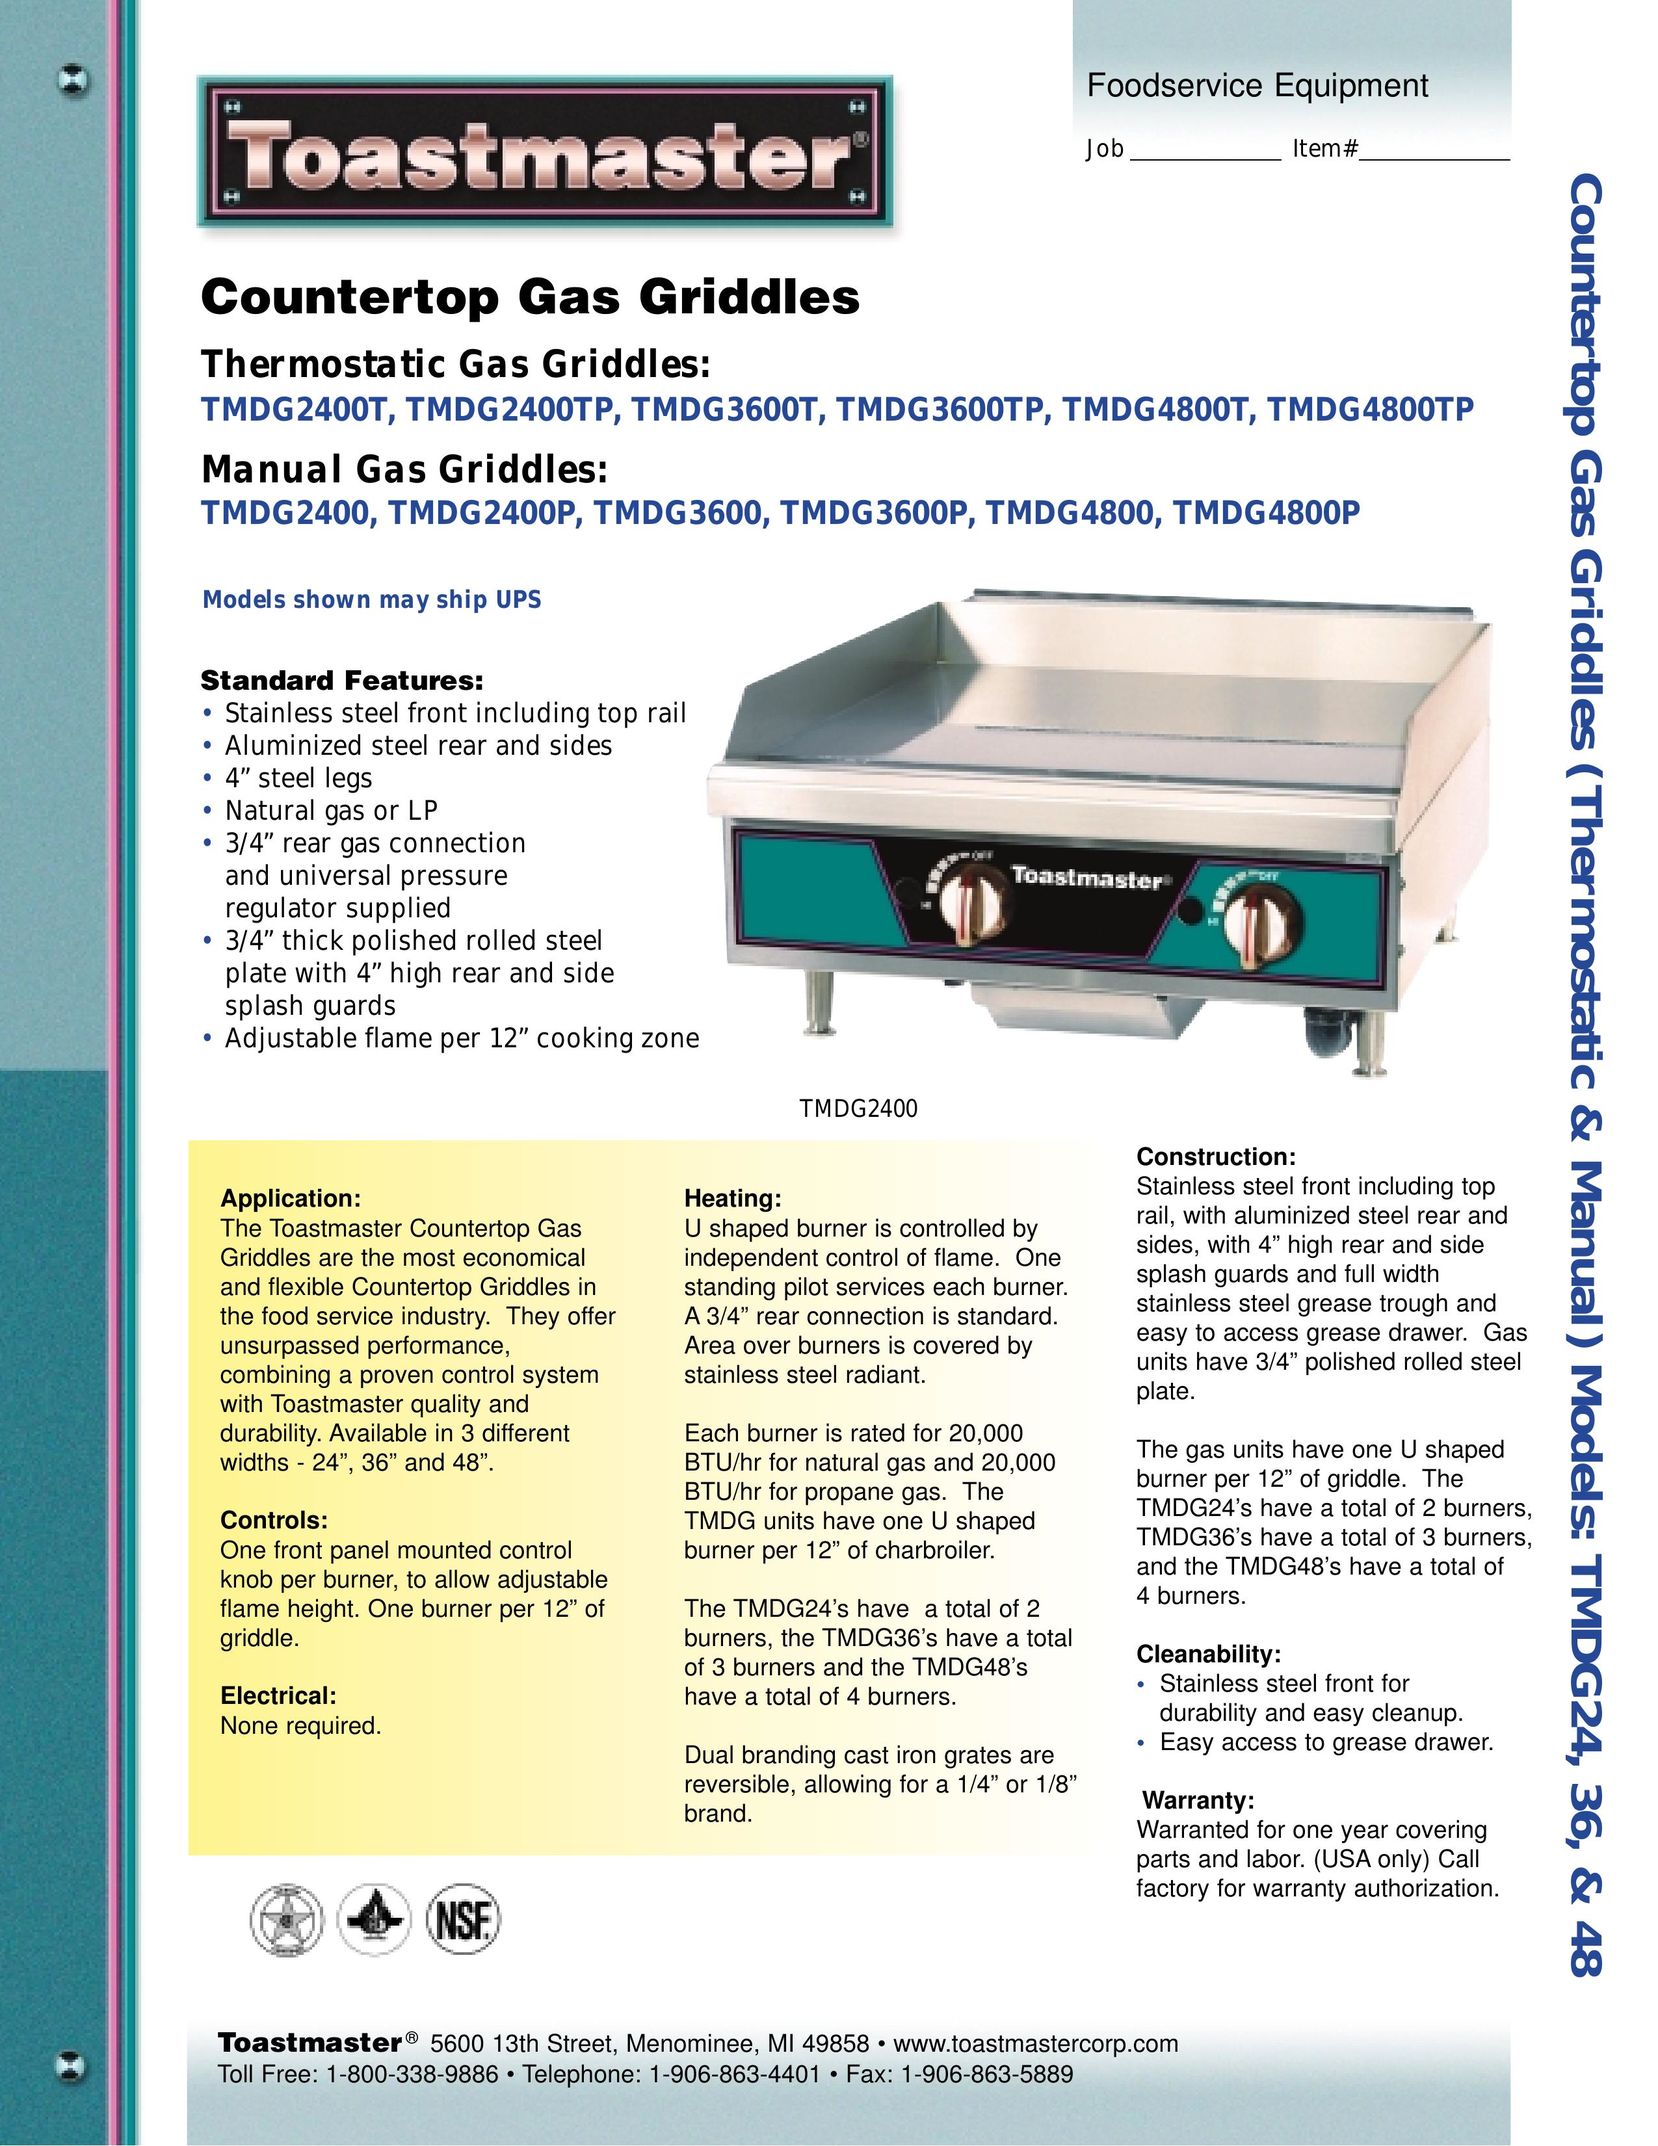 Toastmaster TMDG4800 Griddle User Manual